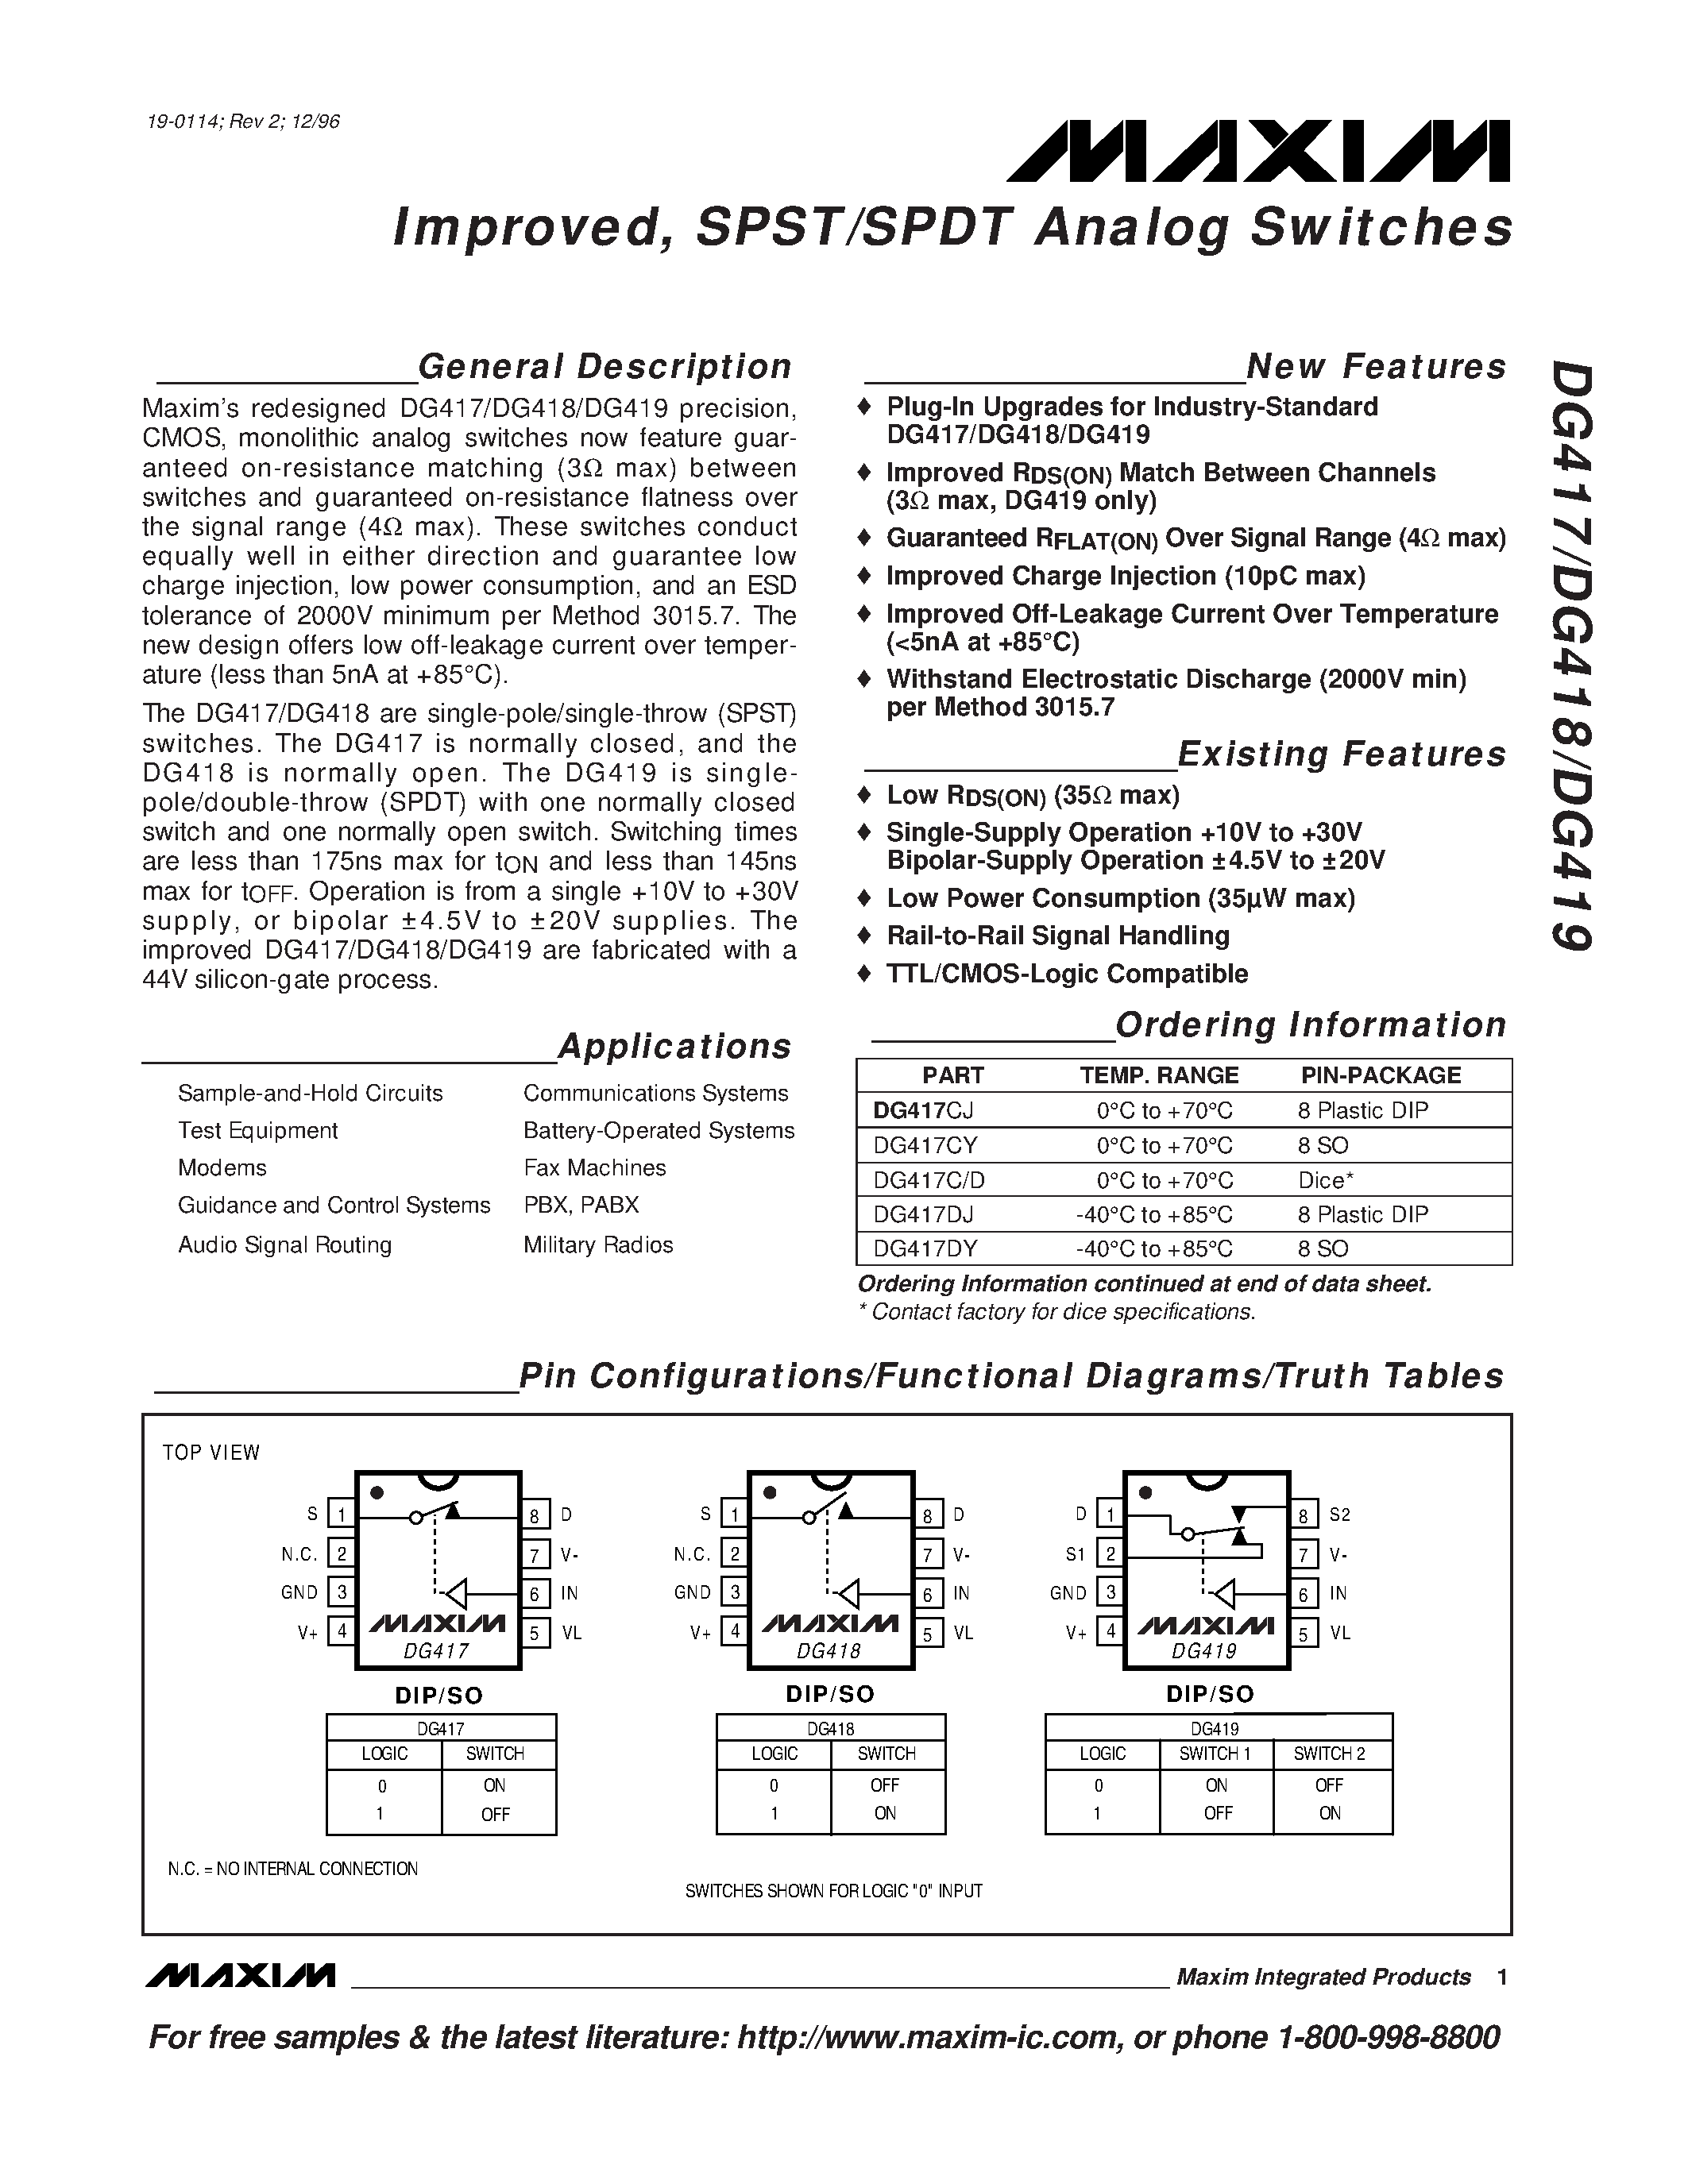 Datasheet DG419C/D - Improved / SPST/SPDT Analog Switches page 1